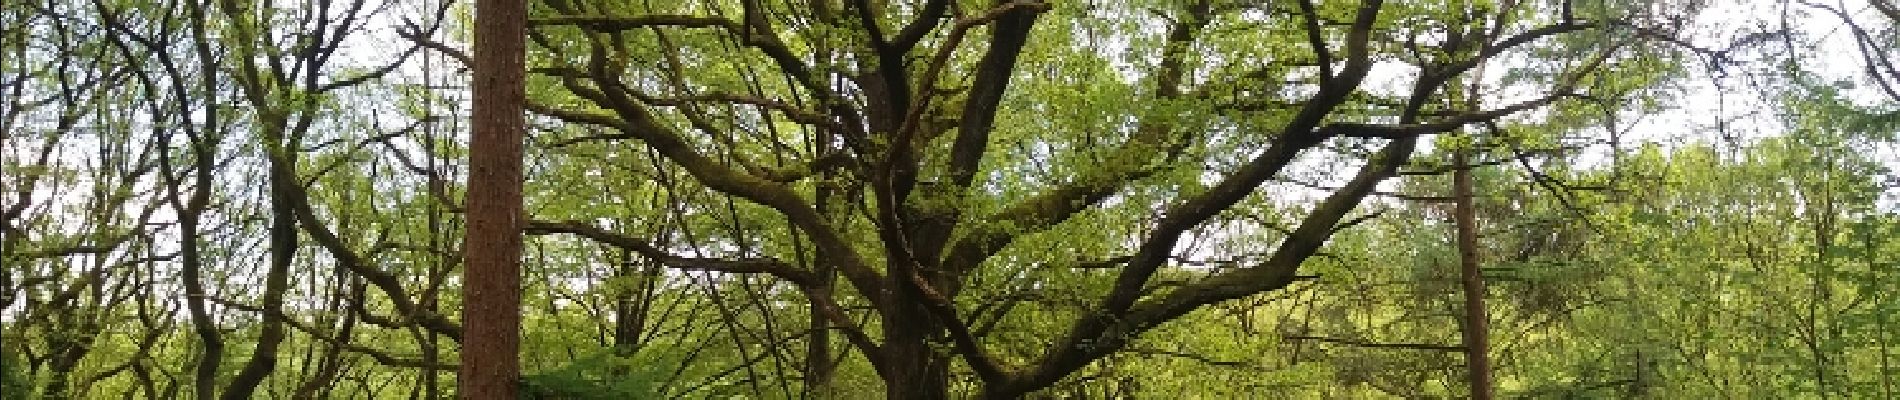 POI Esneux - chêne remarquable - Photo